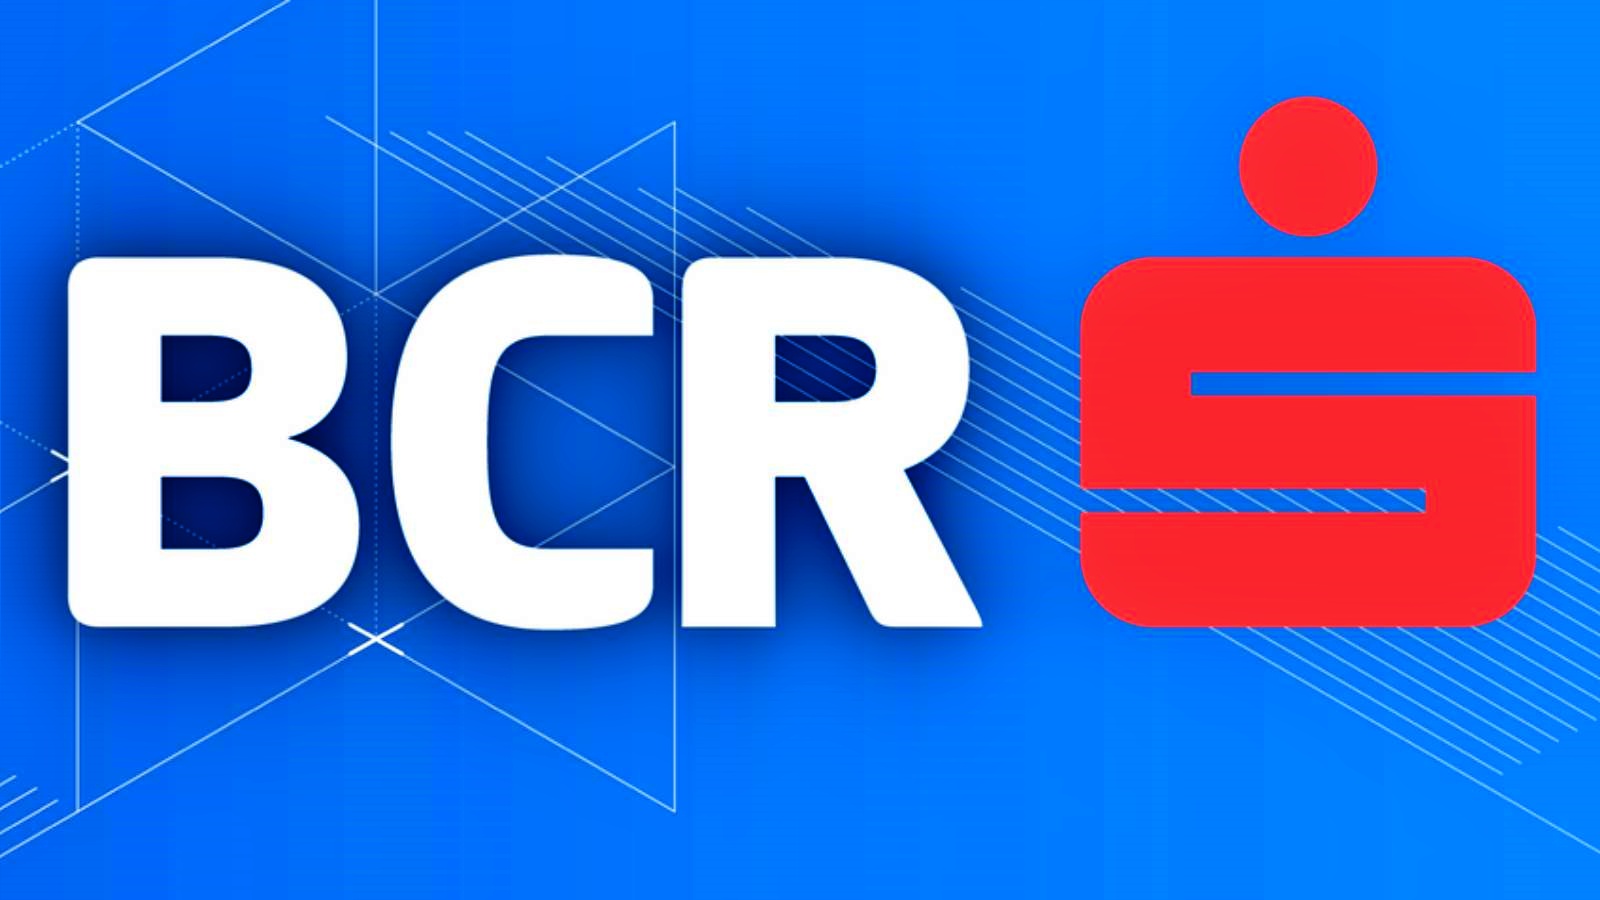 BCR Romania impact